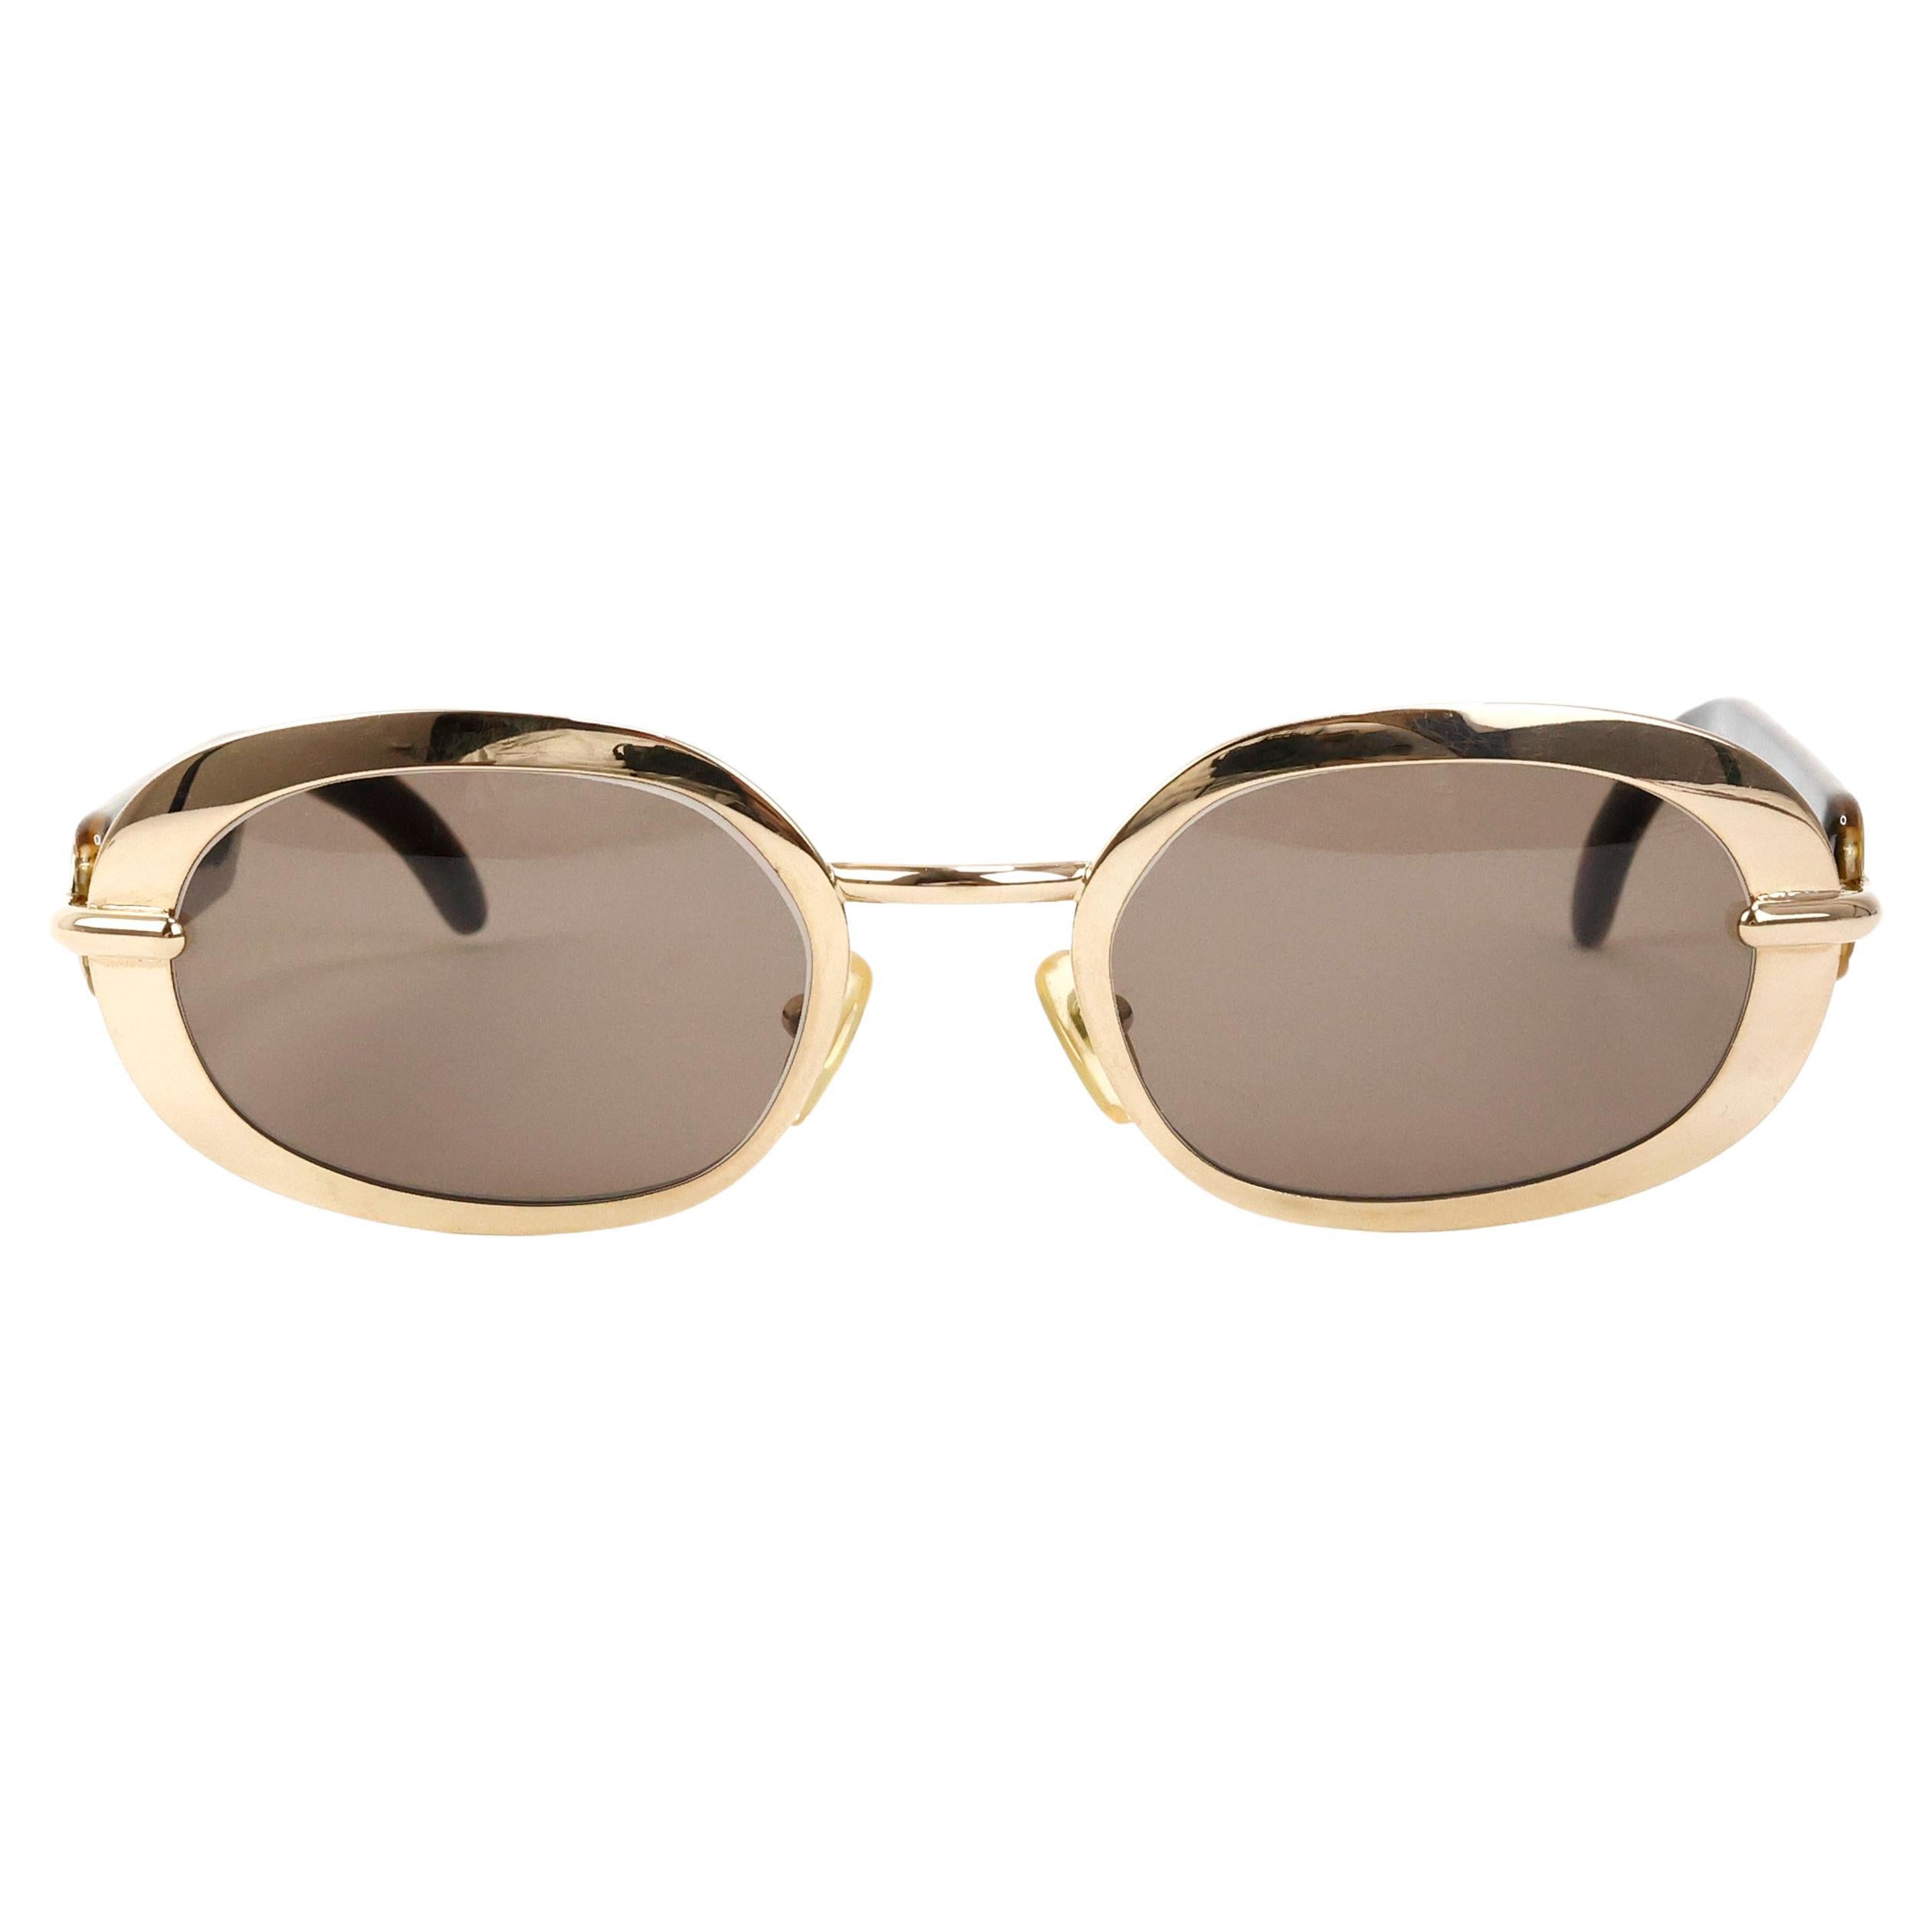 Christian Dior "CARLA" Sunglasses For Sale